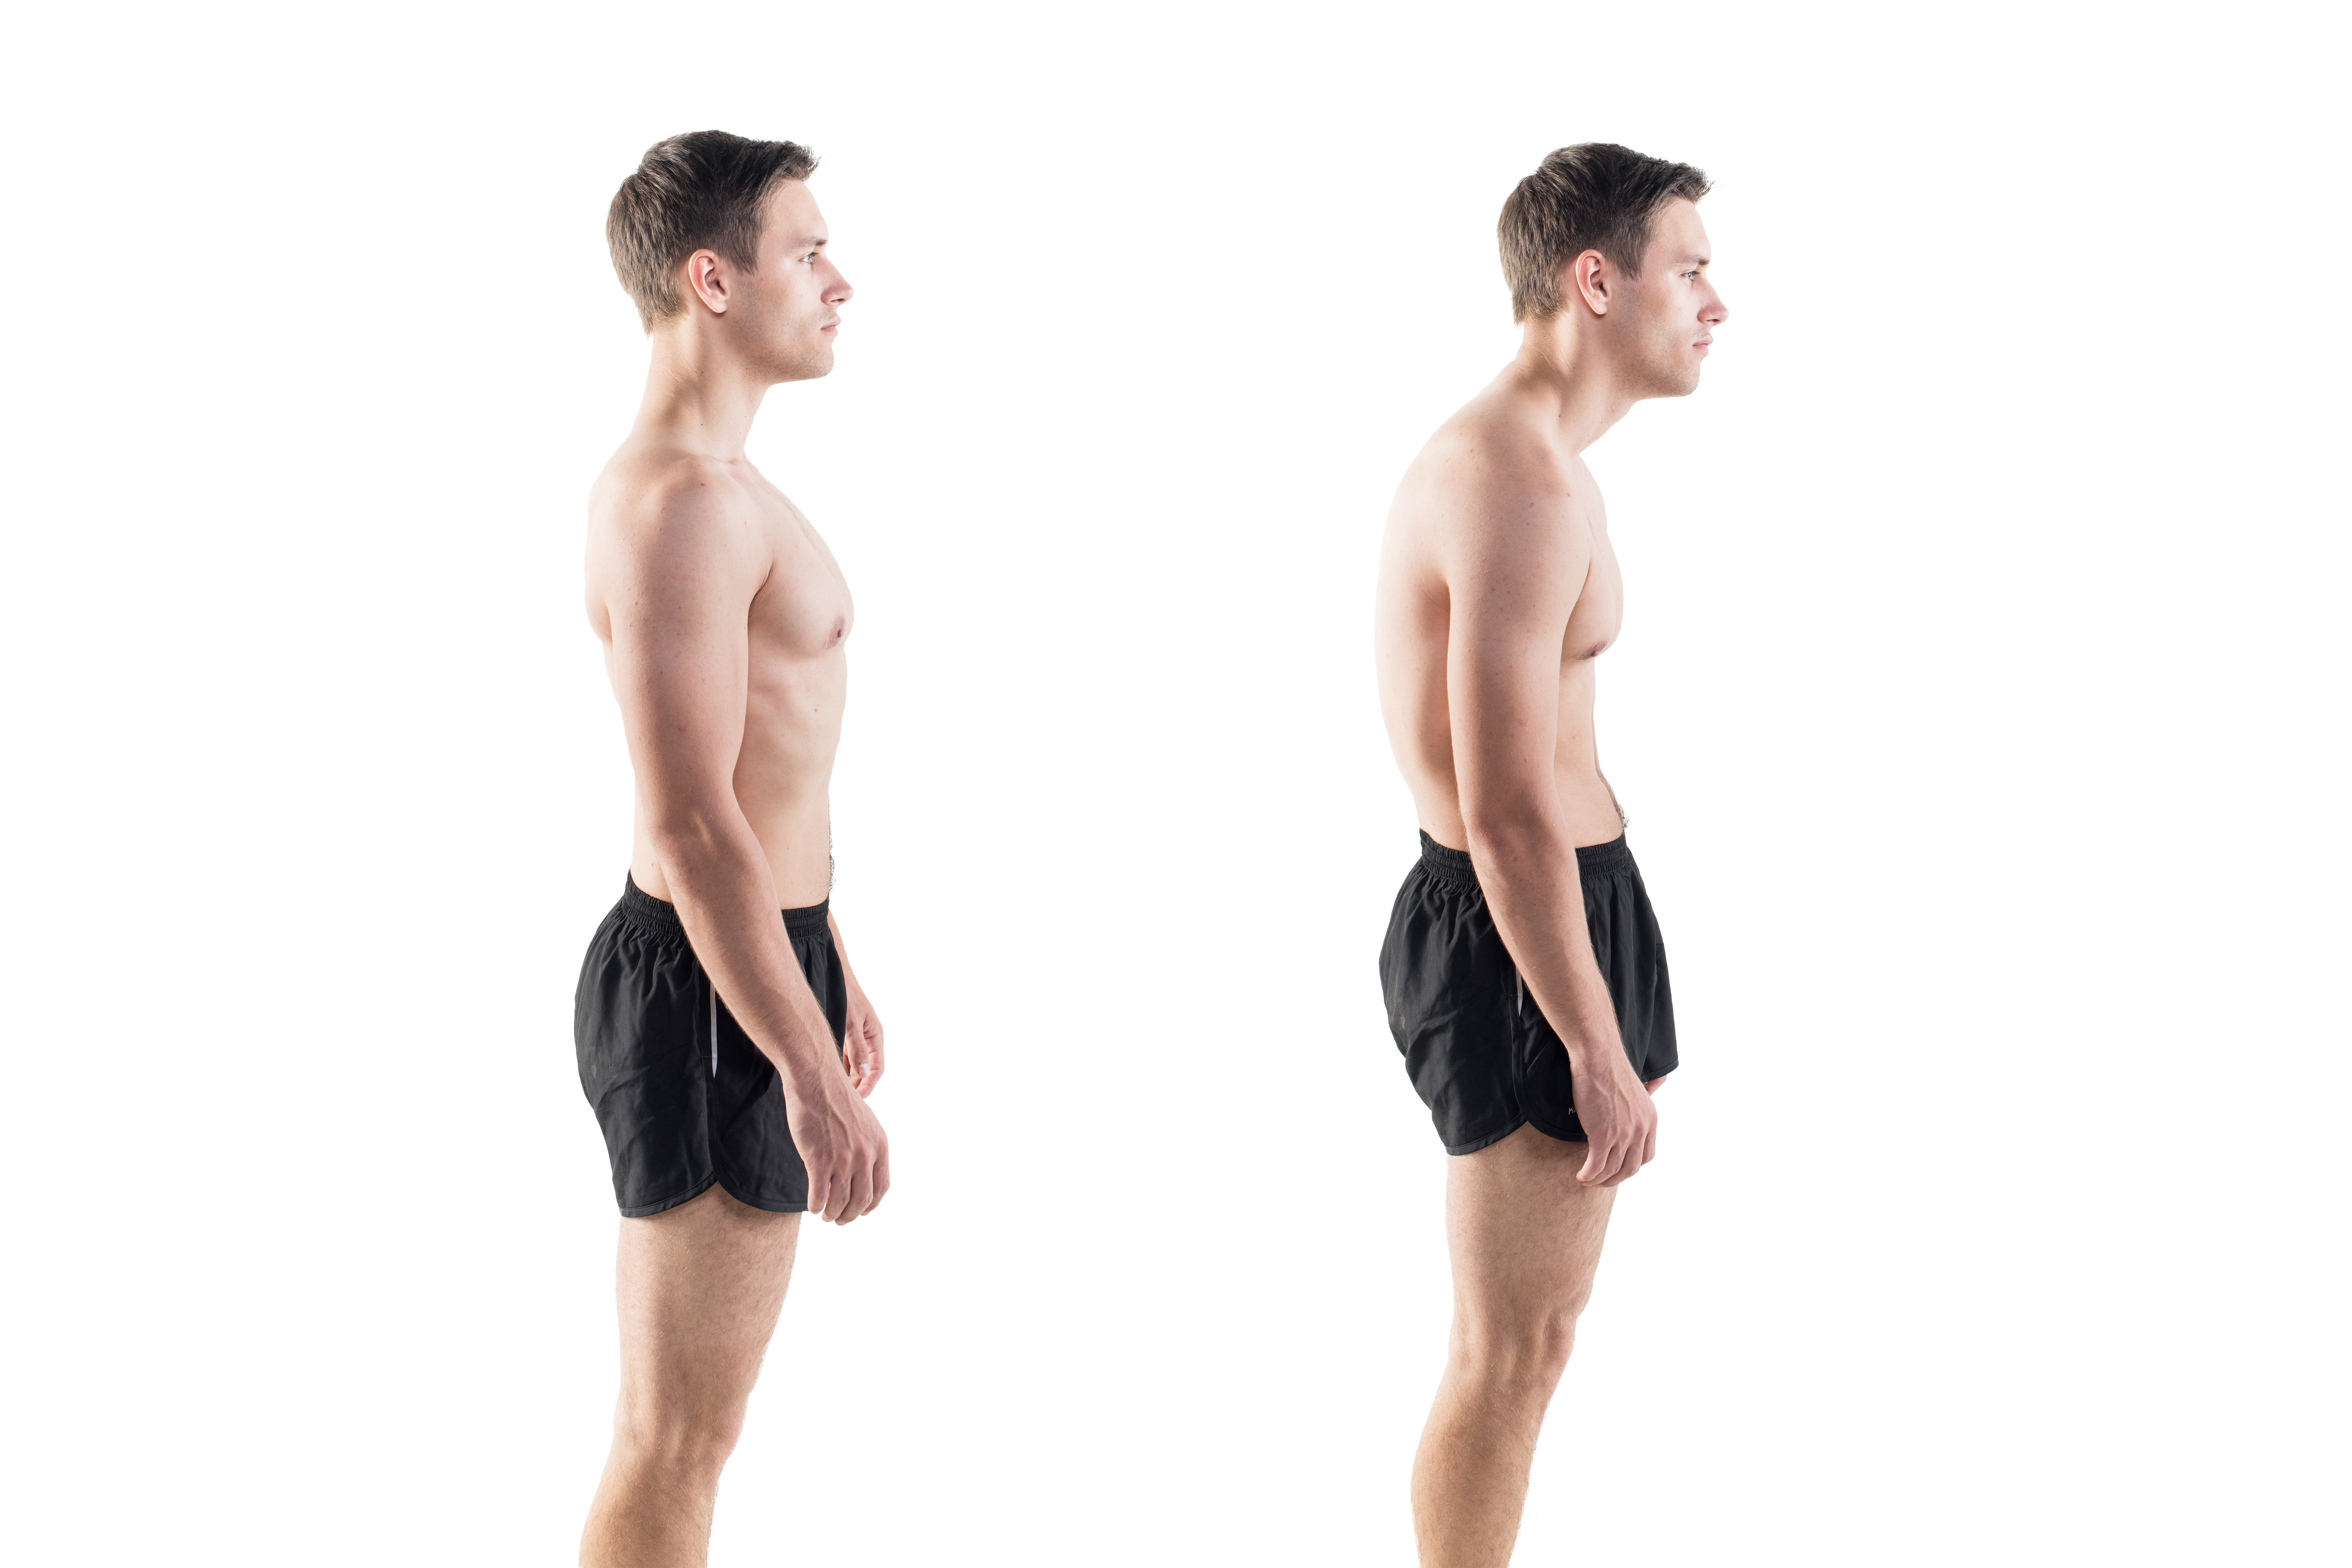 Five quick tricks to improve your posture